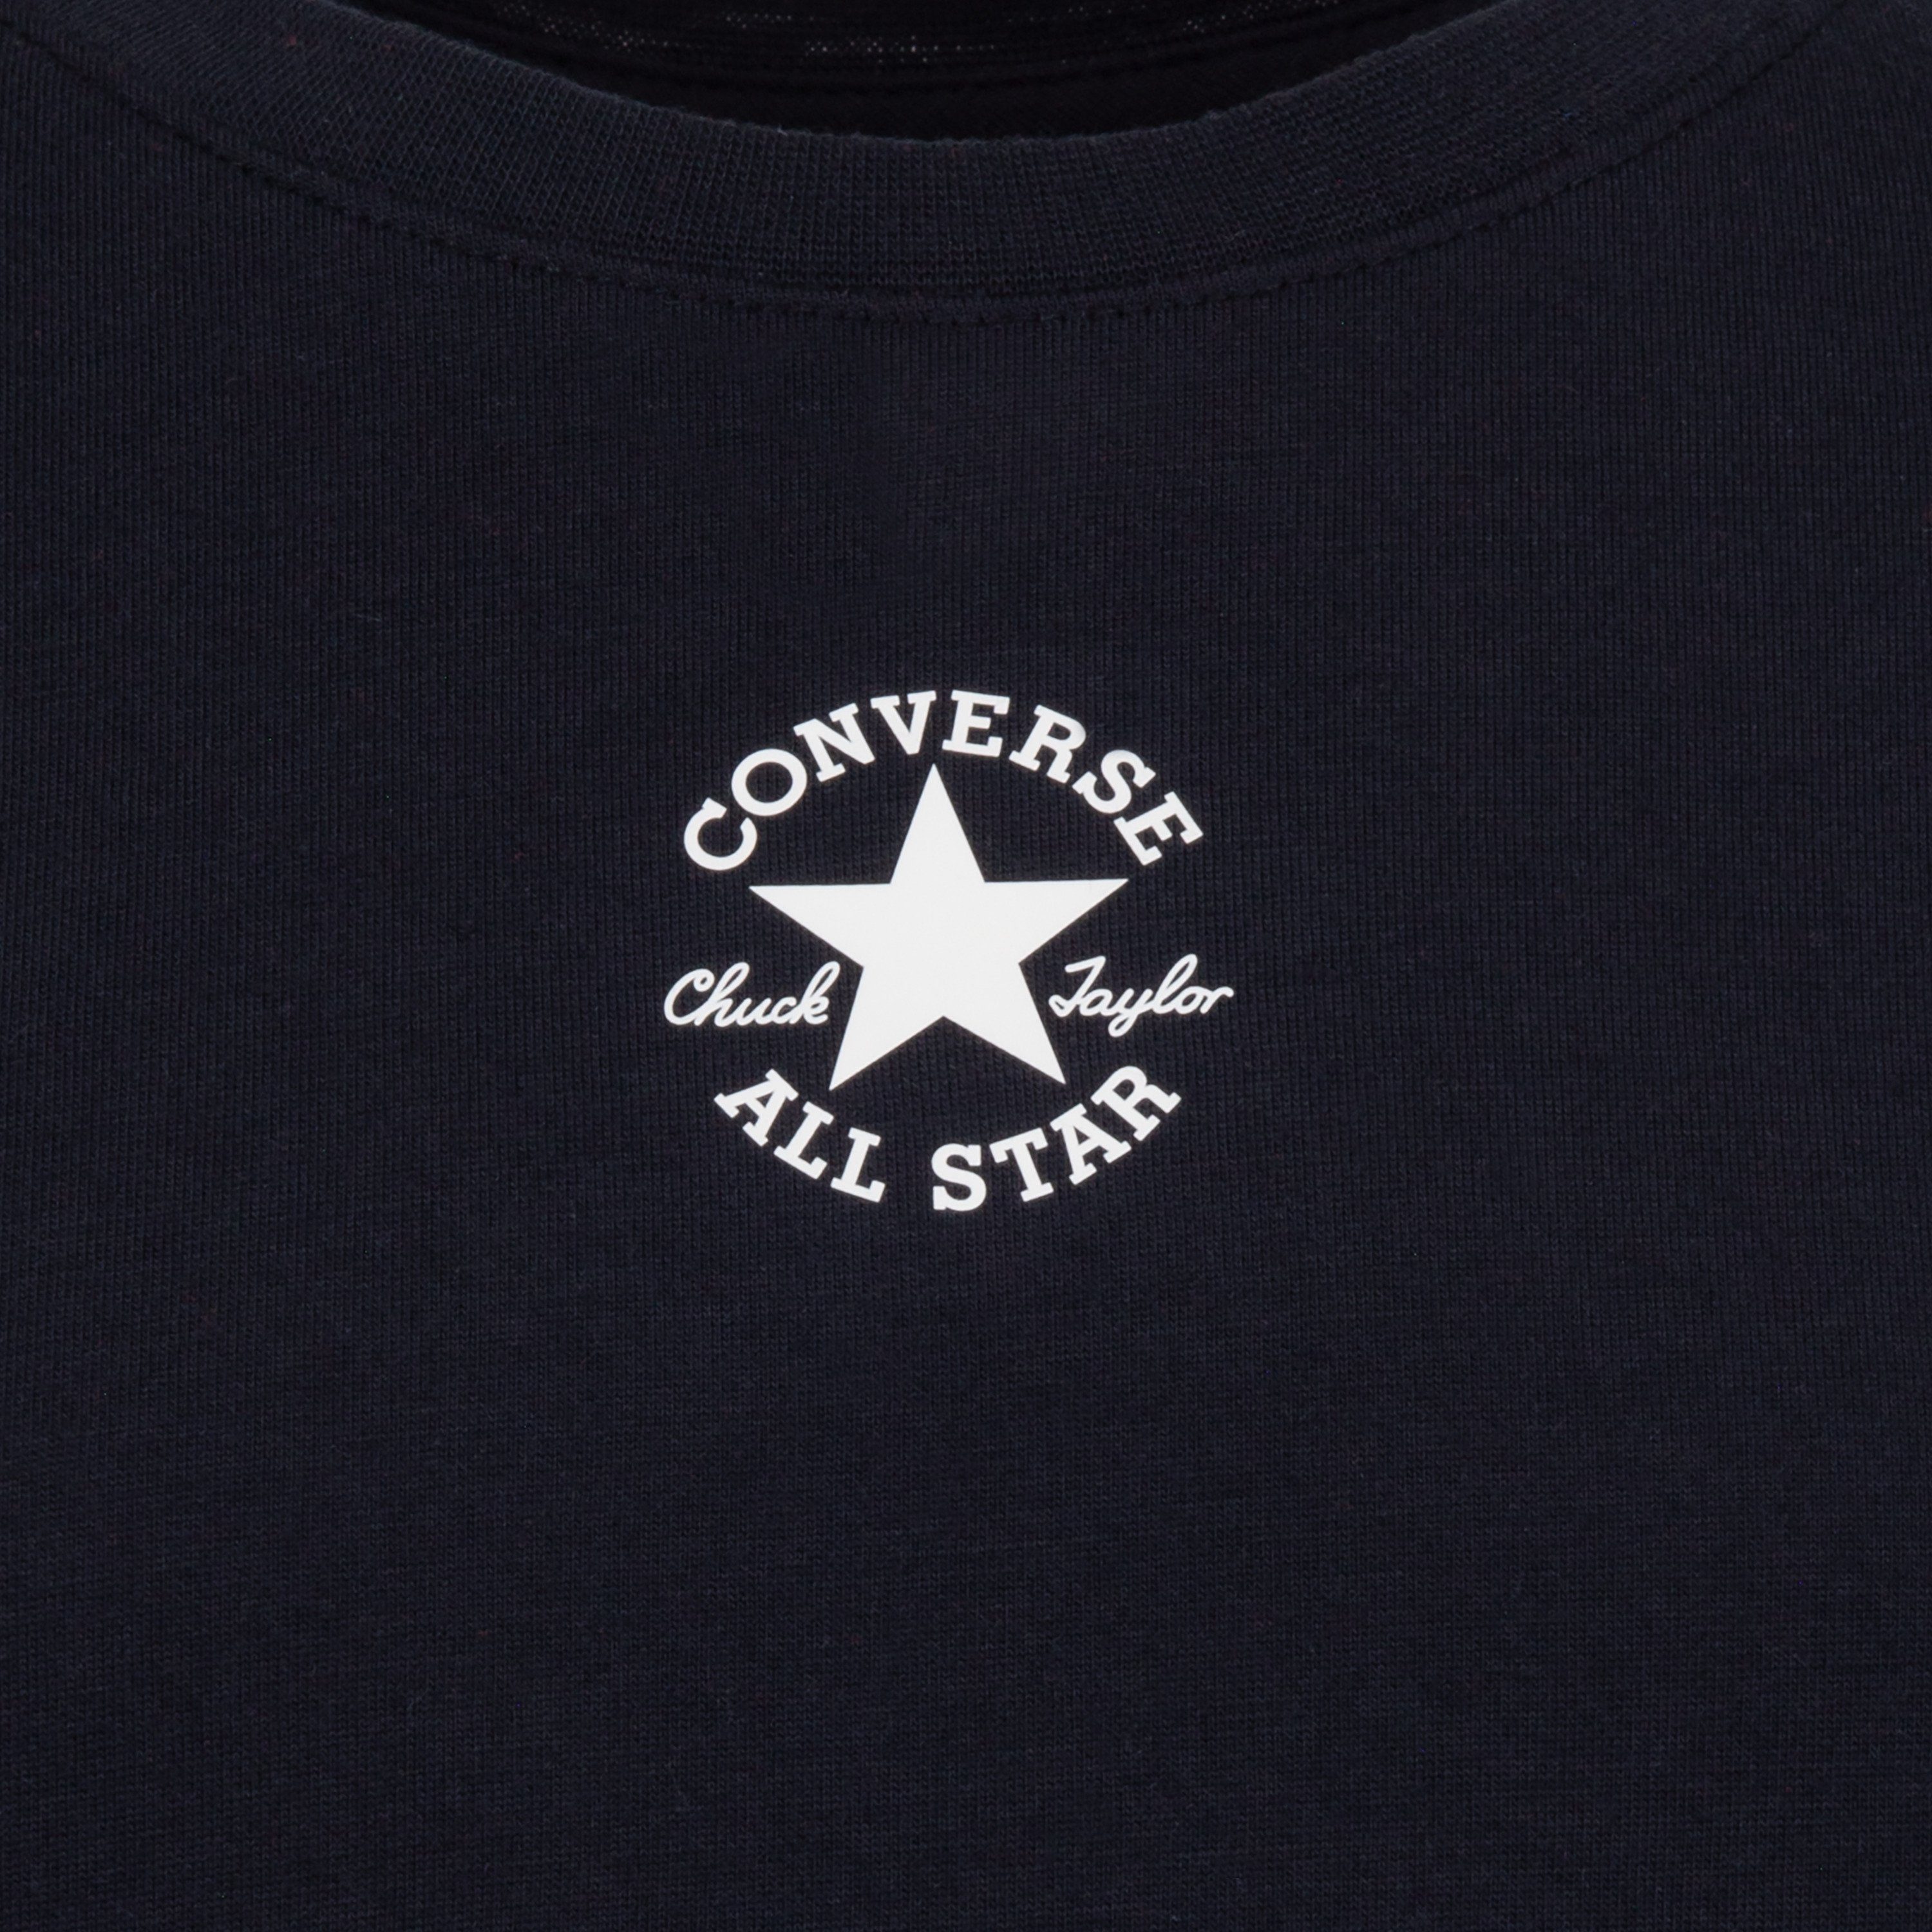 BLACK T-SHIRT PATCH T-Shirt Kinder für Converse BOXY - CHUCK